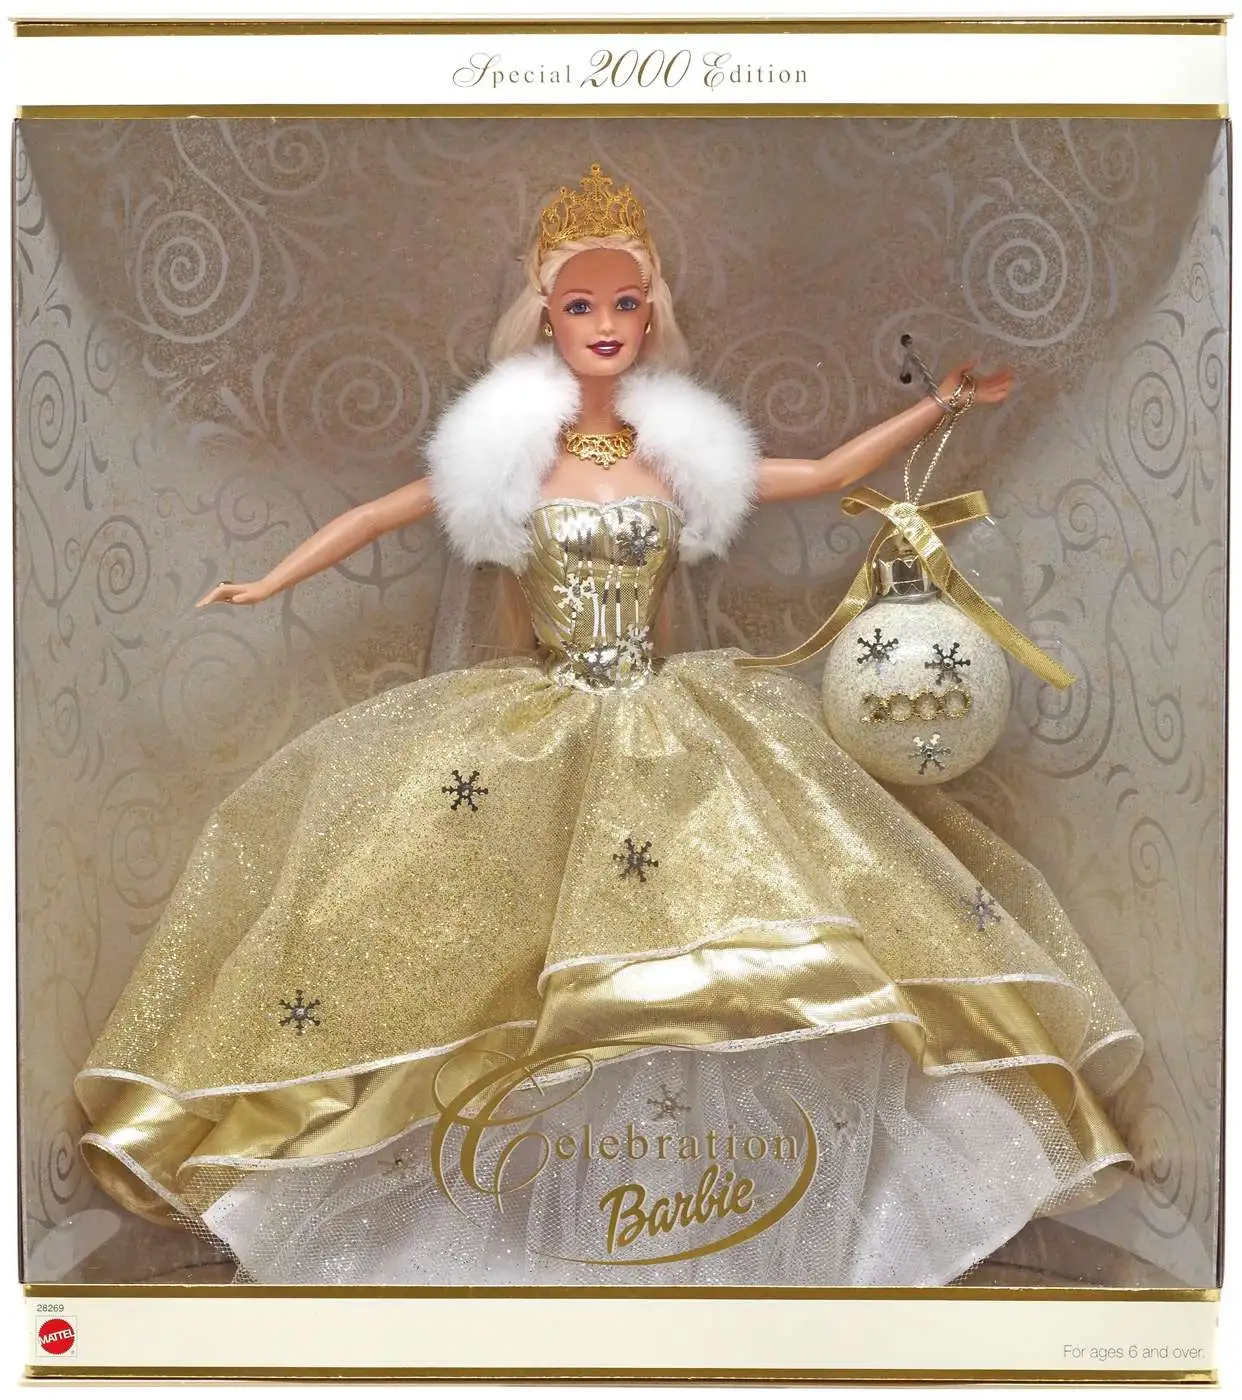 Celebration 2000 Barbie Doll Special Edition